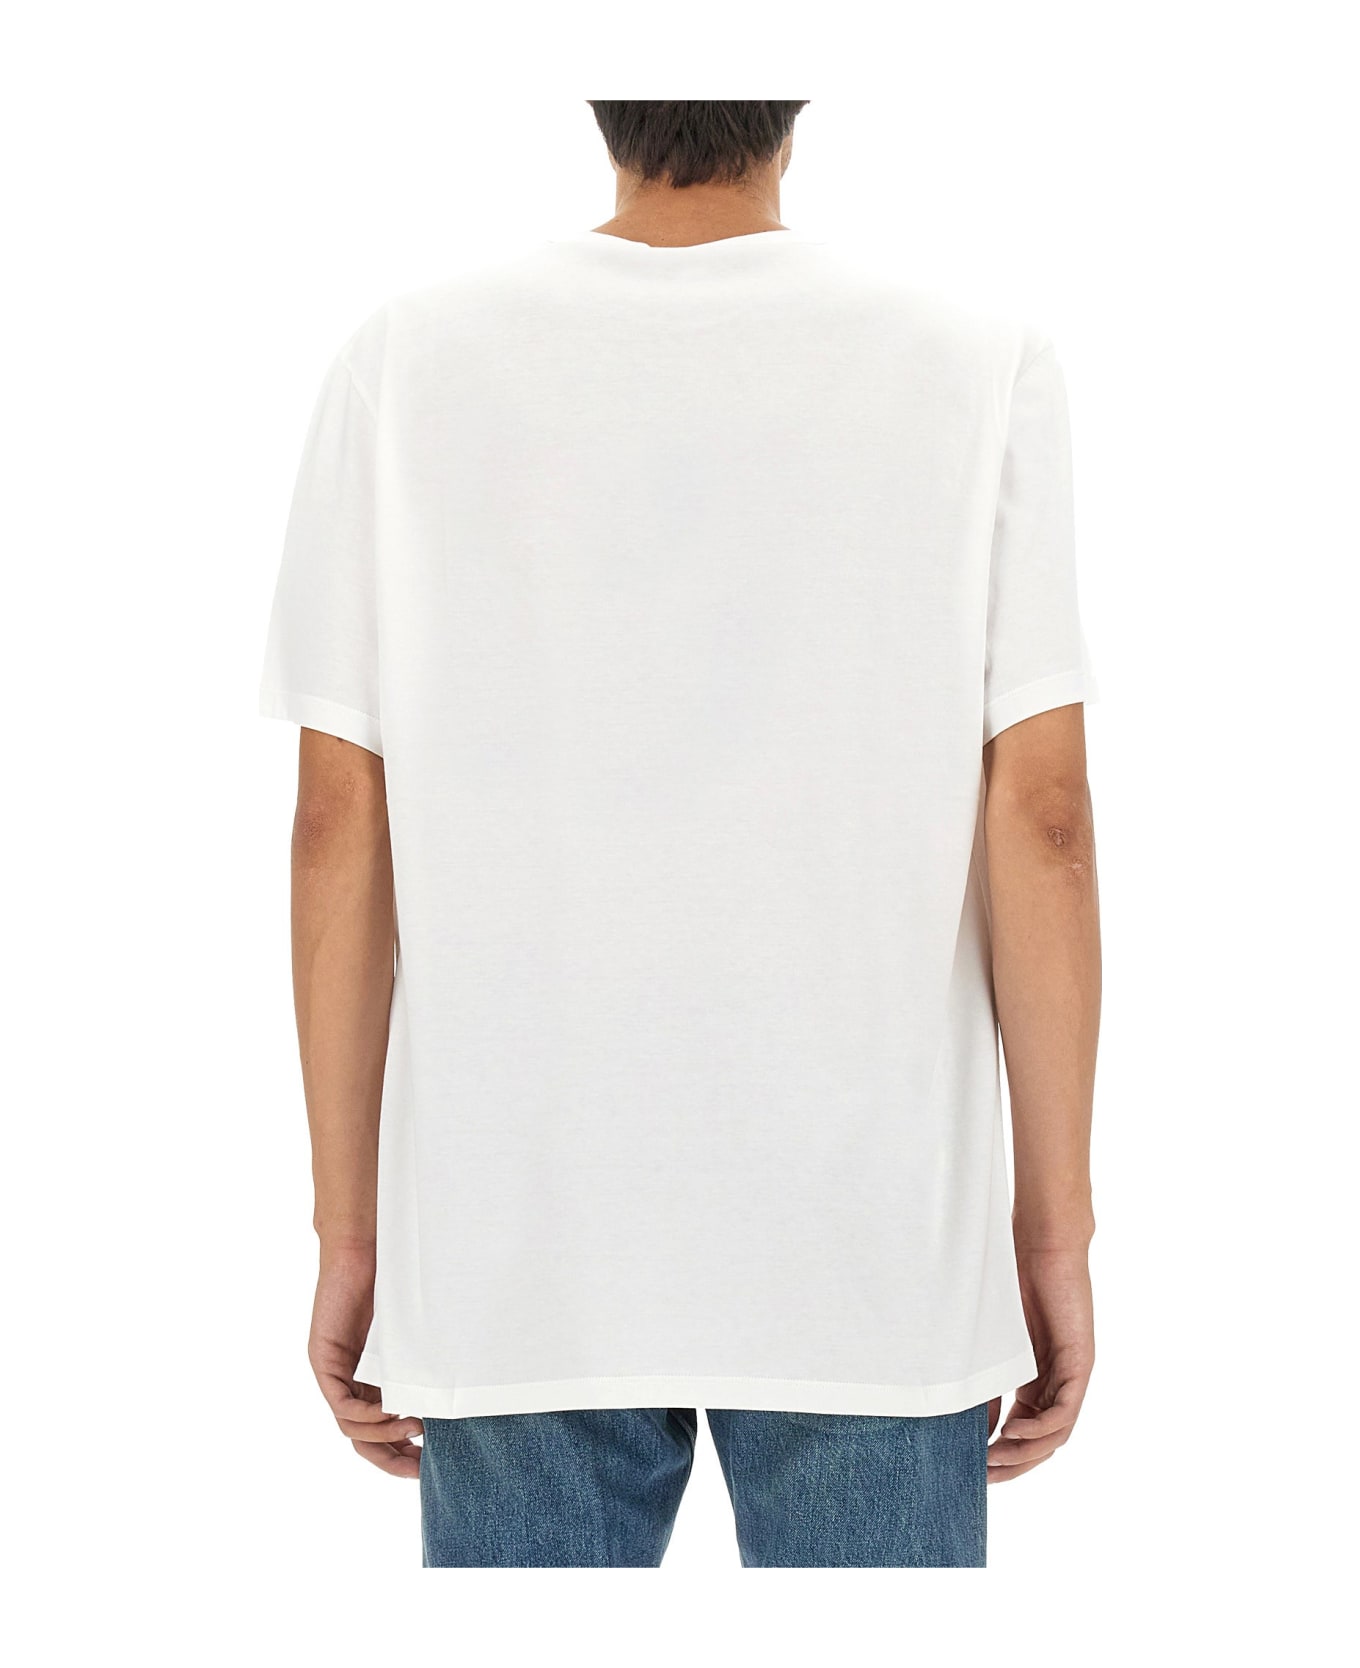 Alexander McQueen Logo Print T-shirt - White Blue